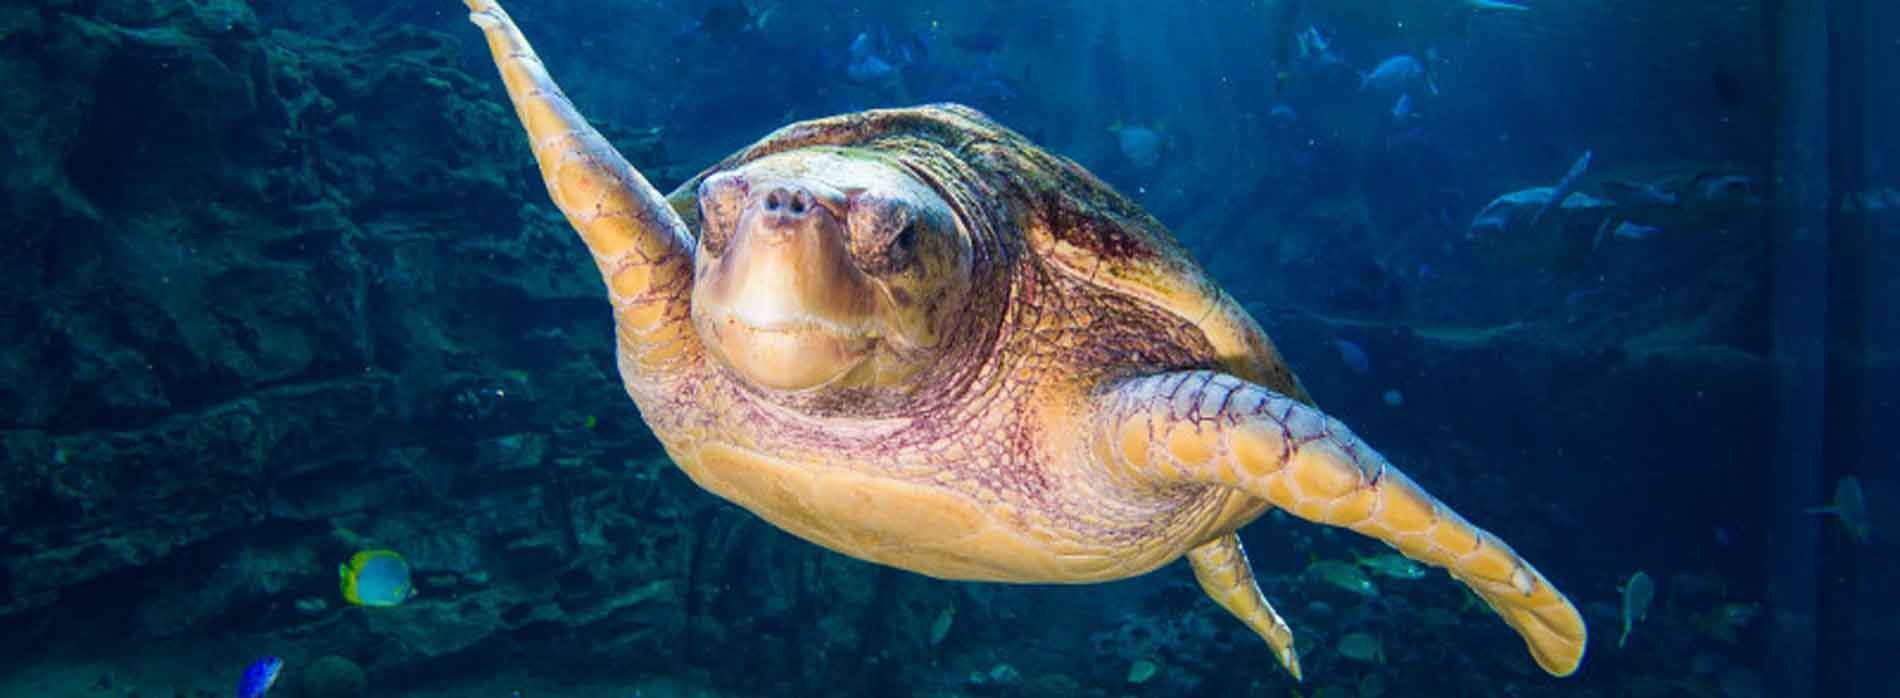 Sea turtle swimming underwater